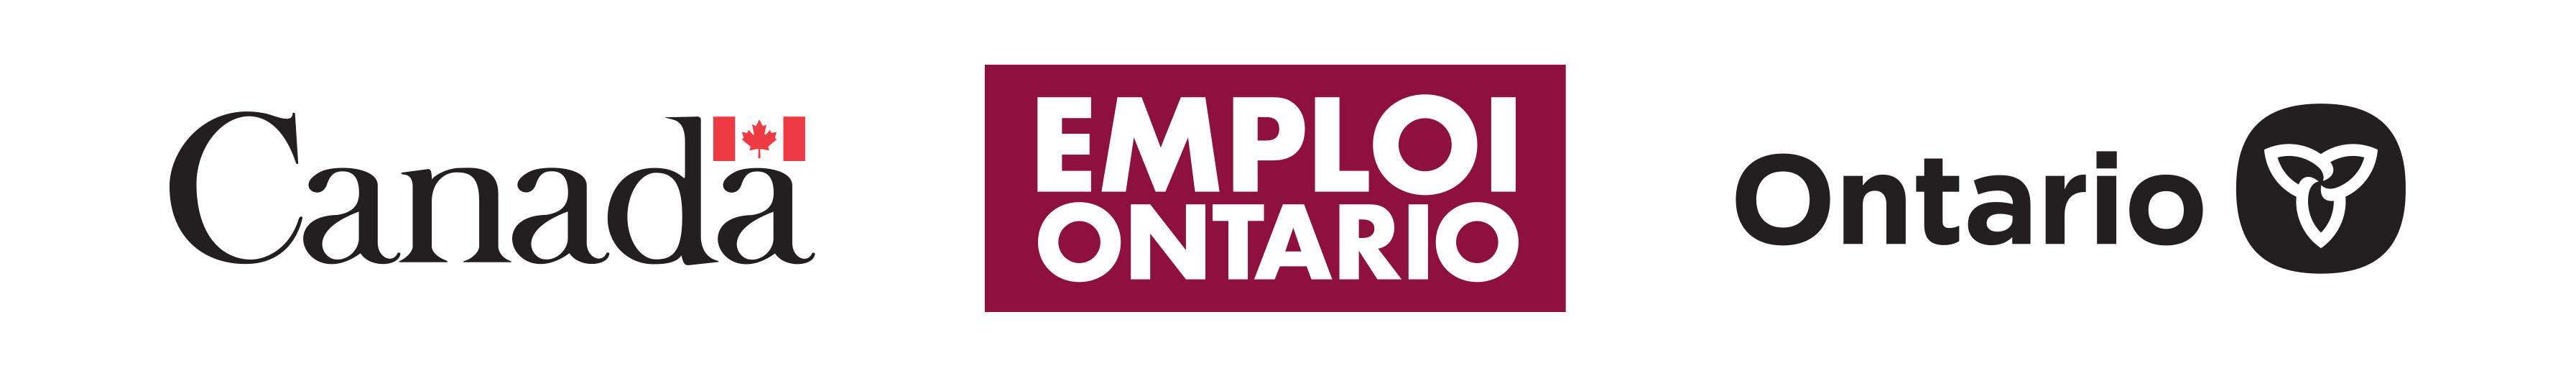 Employment Ontario Tri-Wordmark